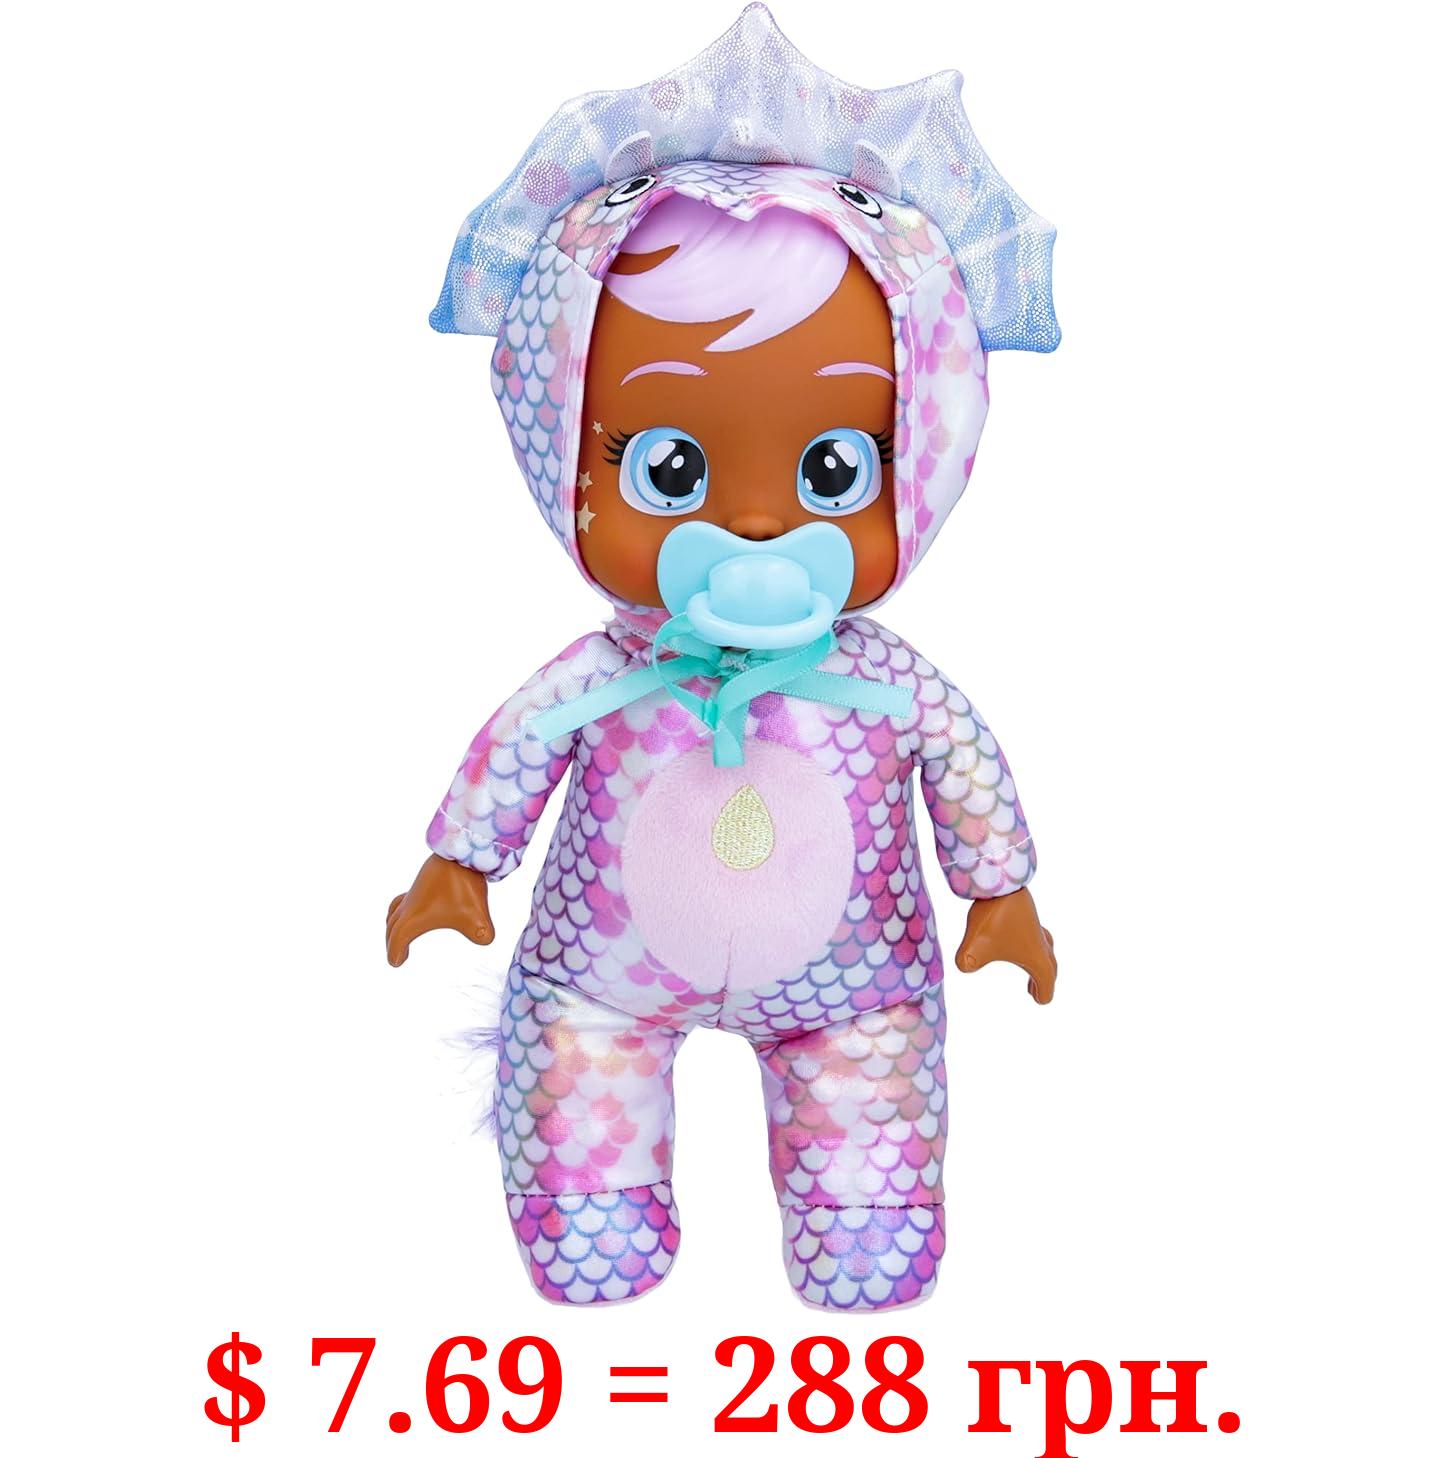 Cry Babies Tiny Cuddles Dinos Phoebe- 9" Baby Dolls, Cries Real Tears, Dinosaur Metallic Themed Pajamas